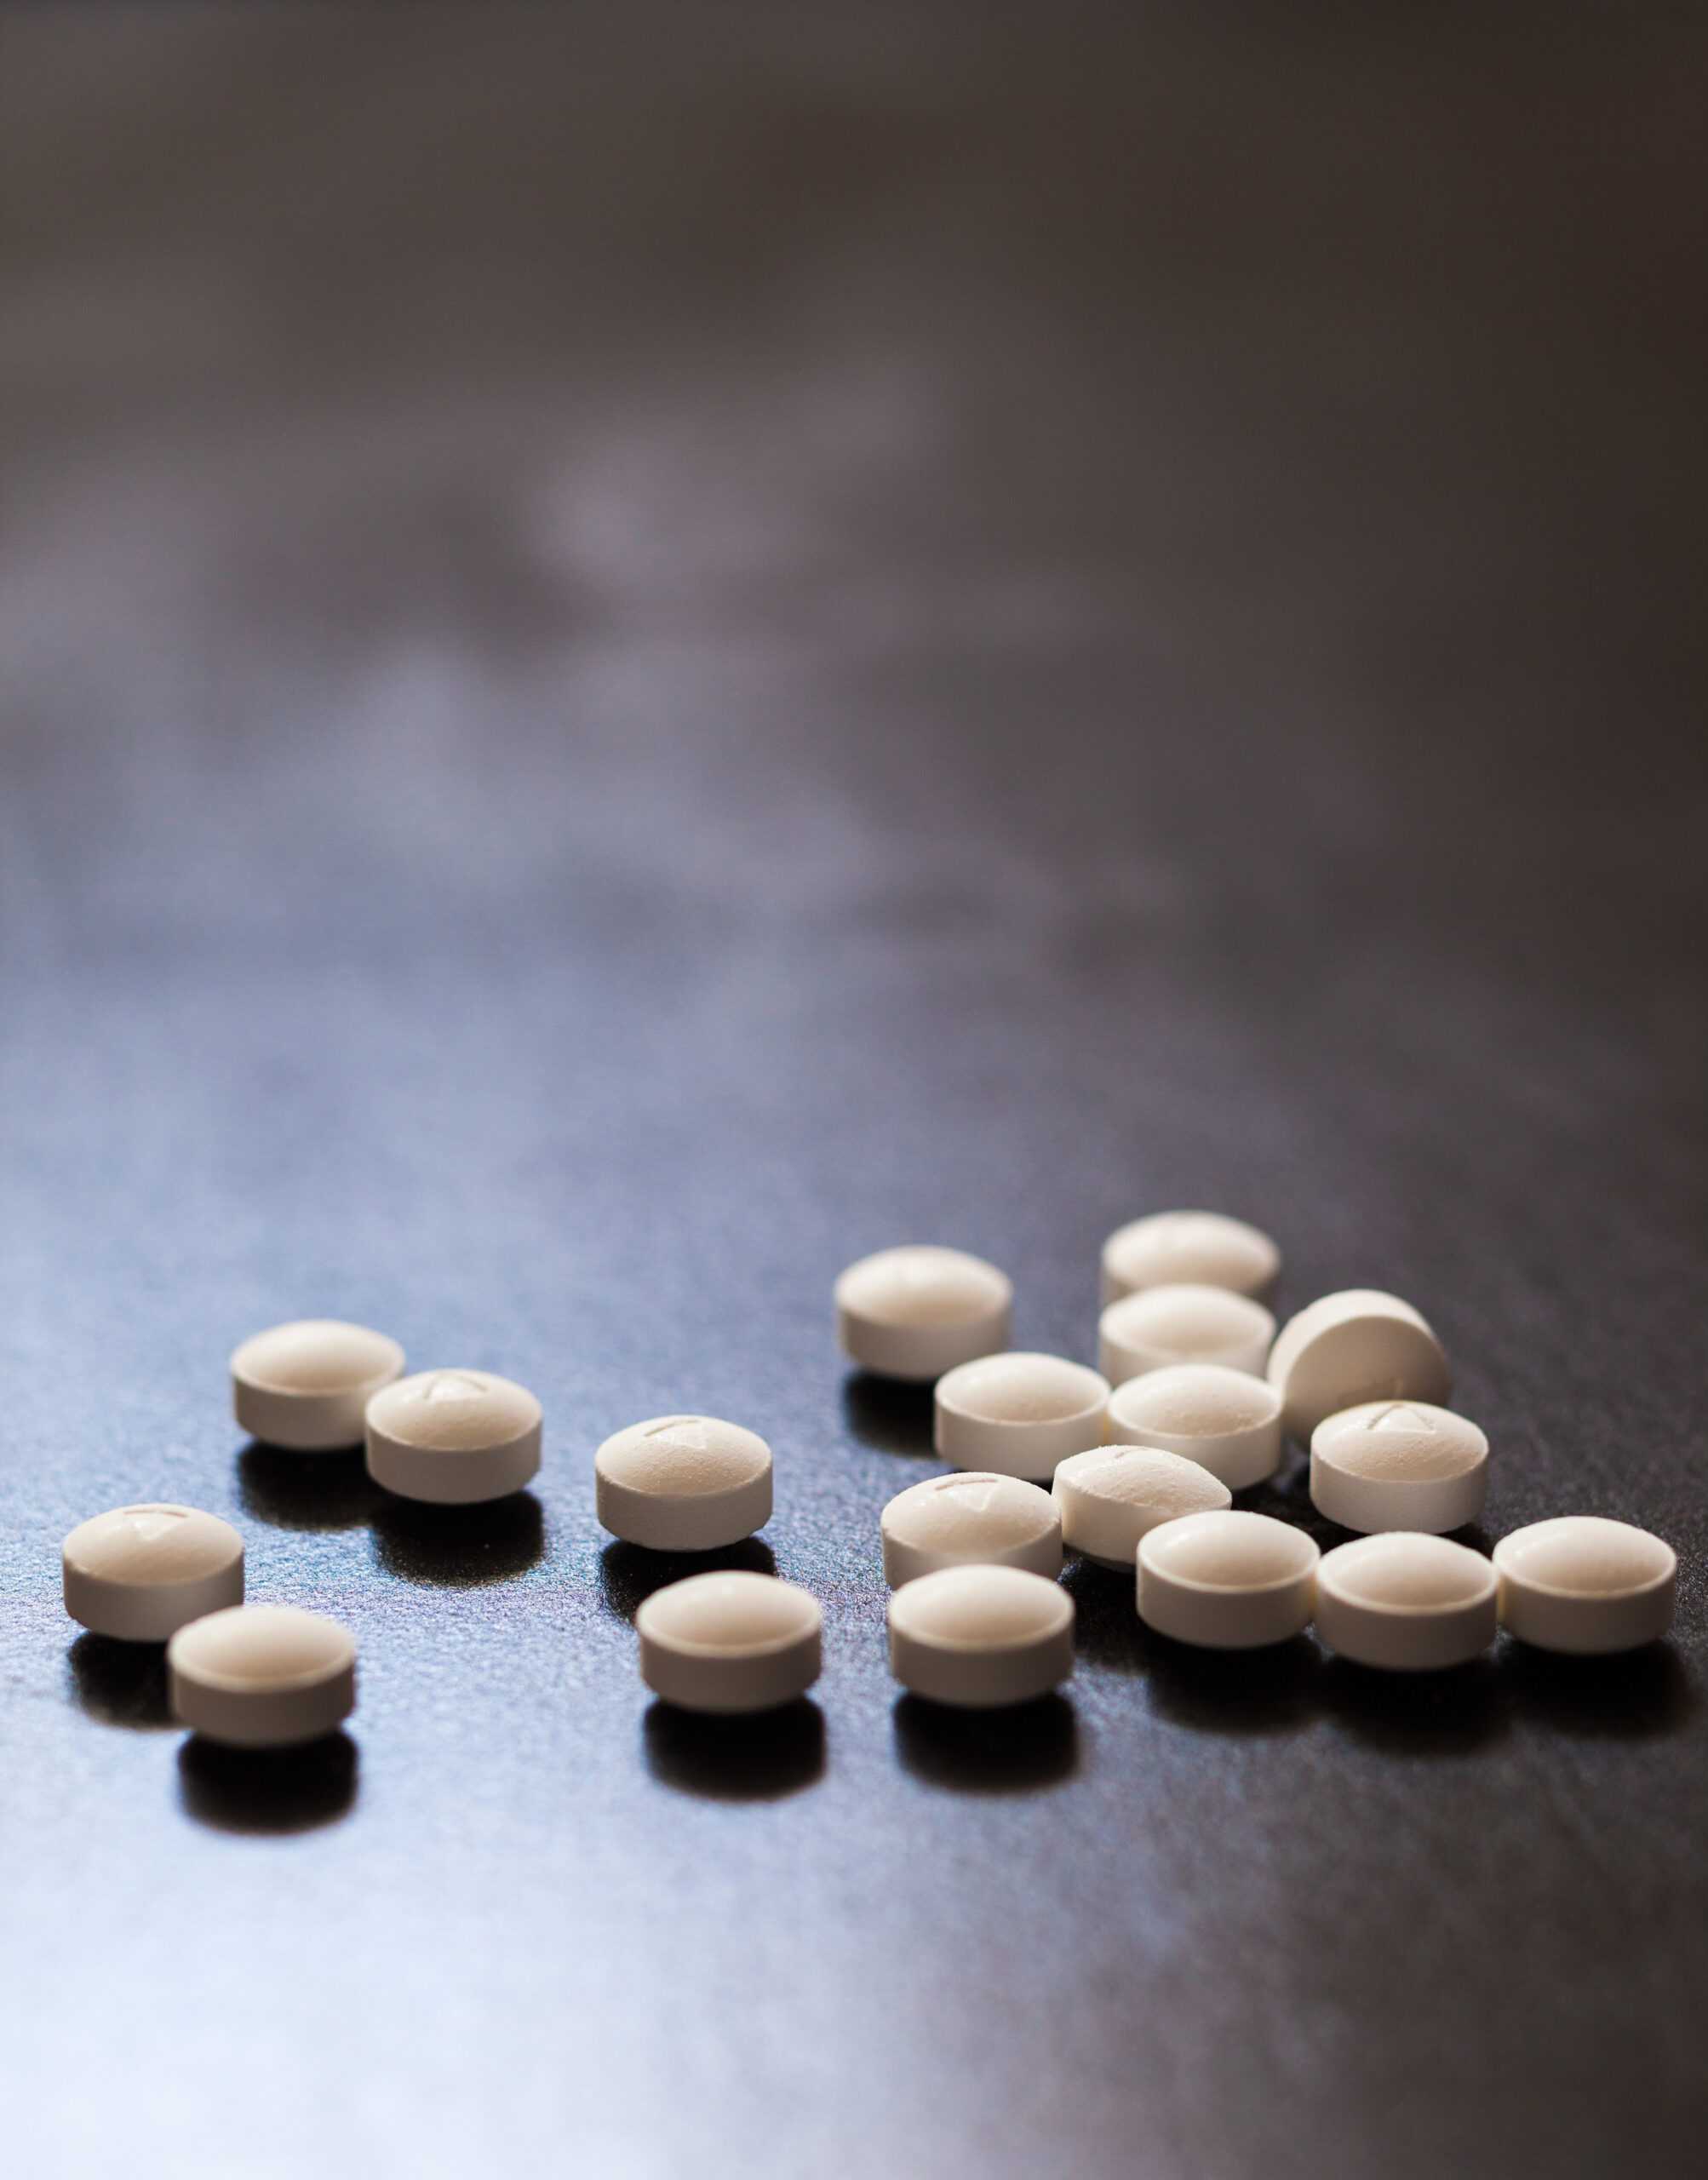 Backlit,White,Pills,-,Opioid,And,Prescription,Medication,Addiction,Epidemic